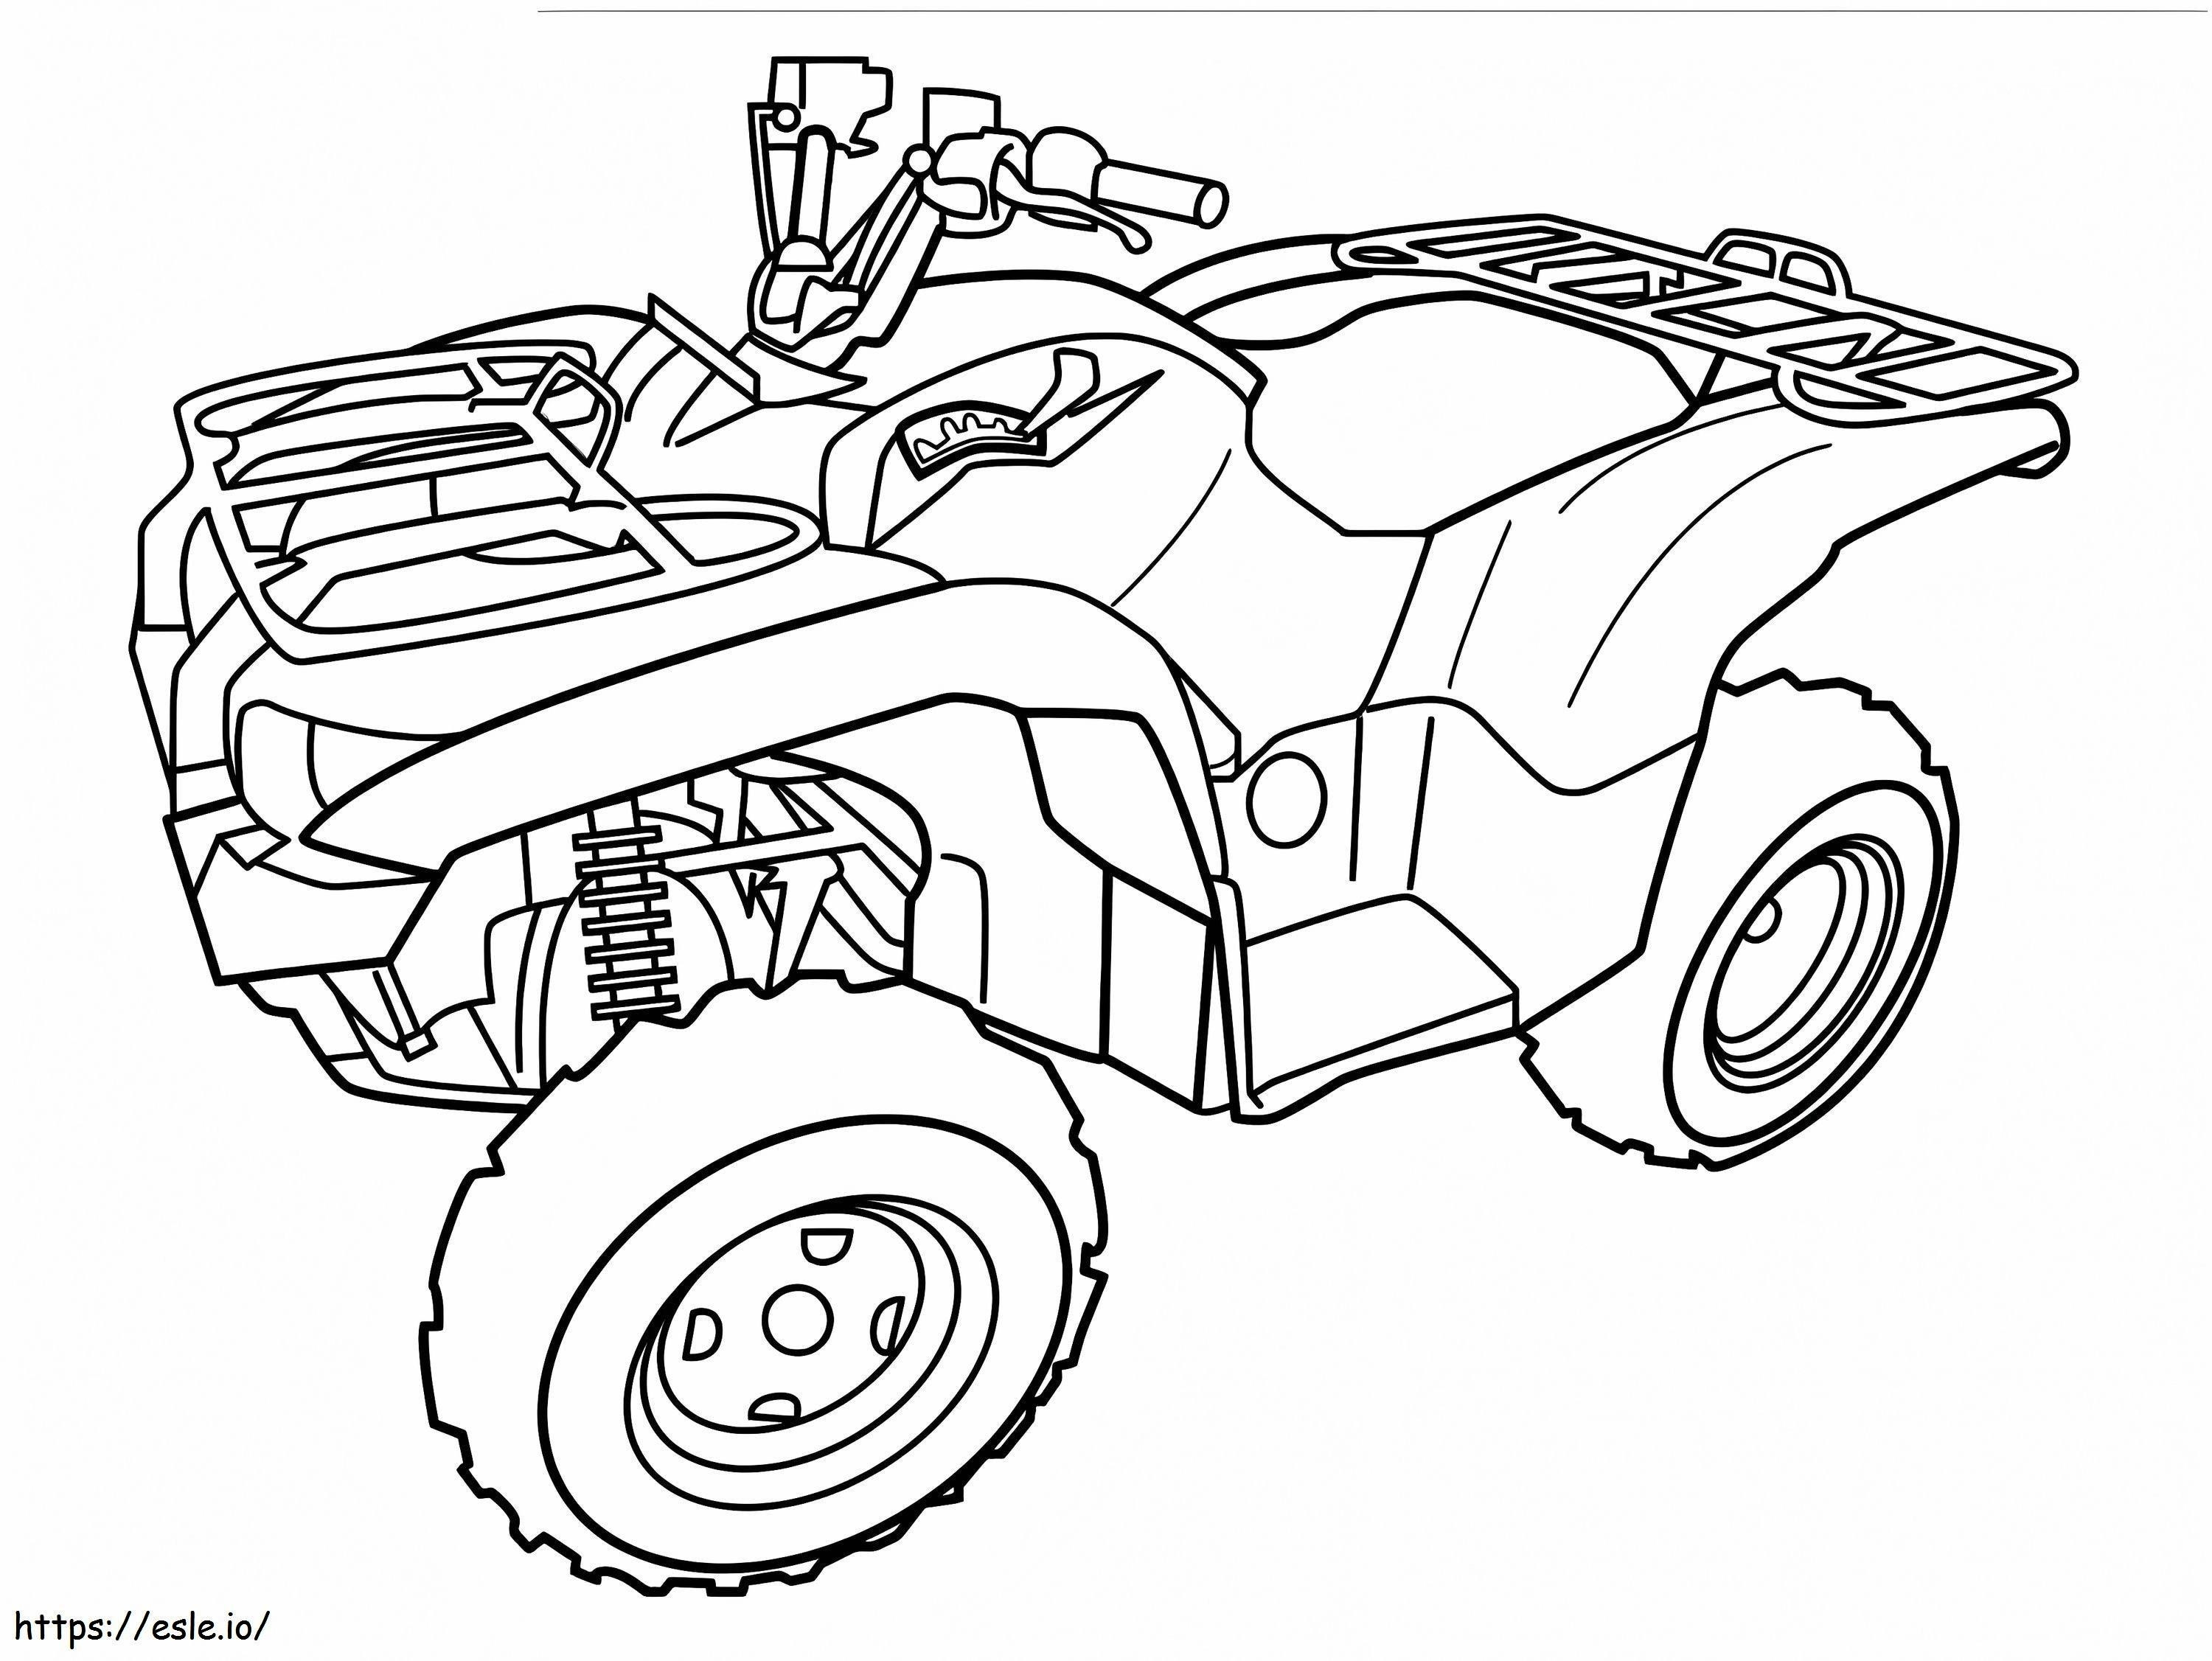 Yamaha ATV coloring page